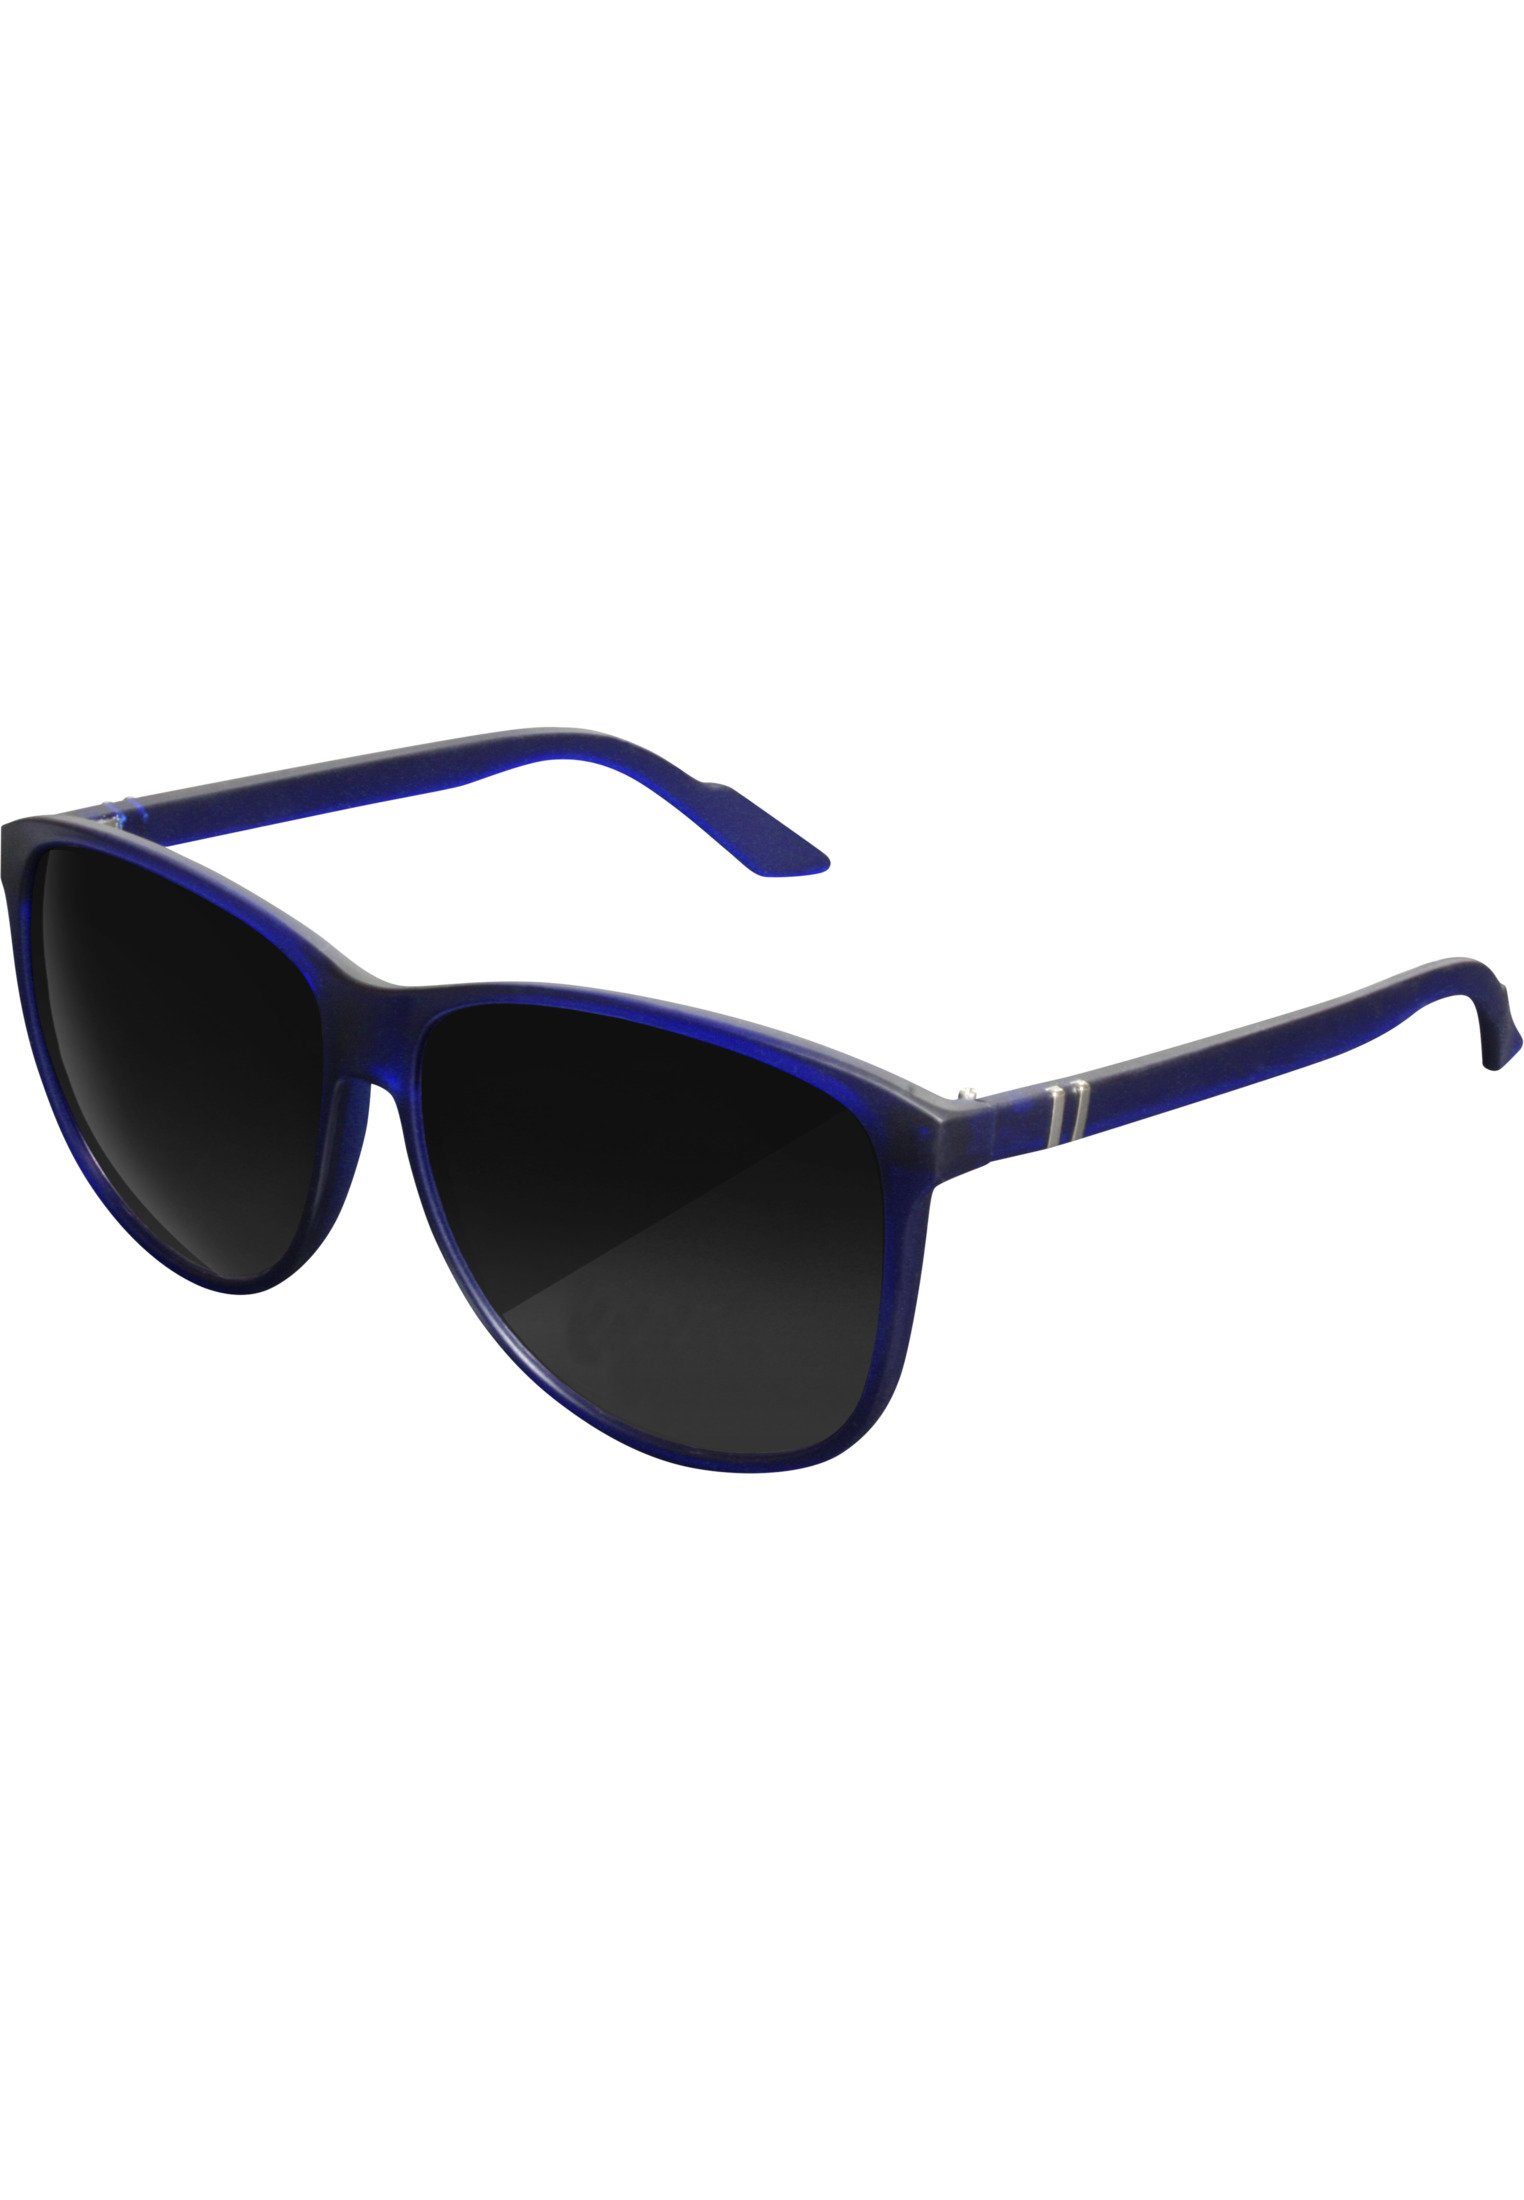 MSTRDS Sonnenbrille Accessoires Sunglasses Chirwa royal | Sonnenbrillen